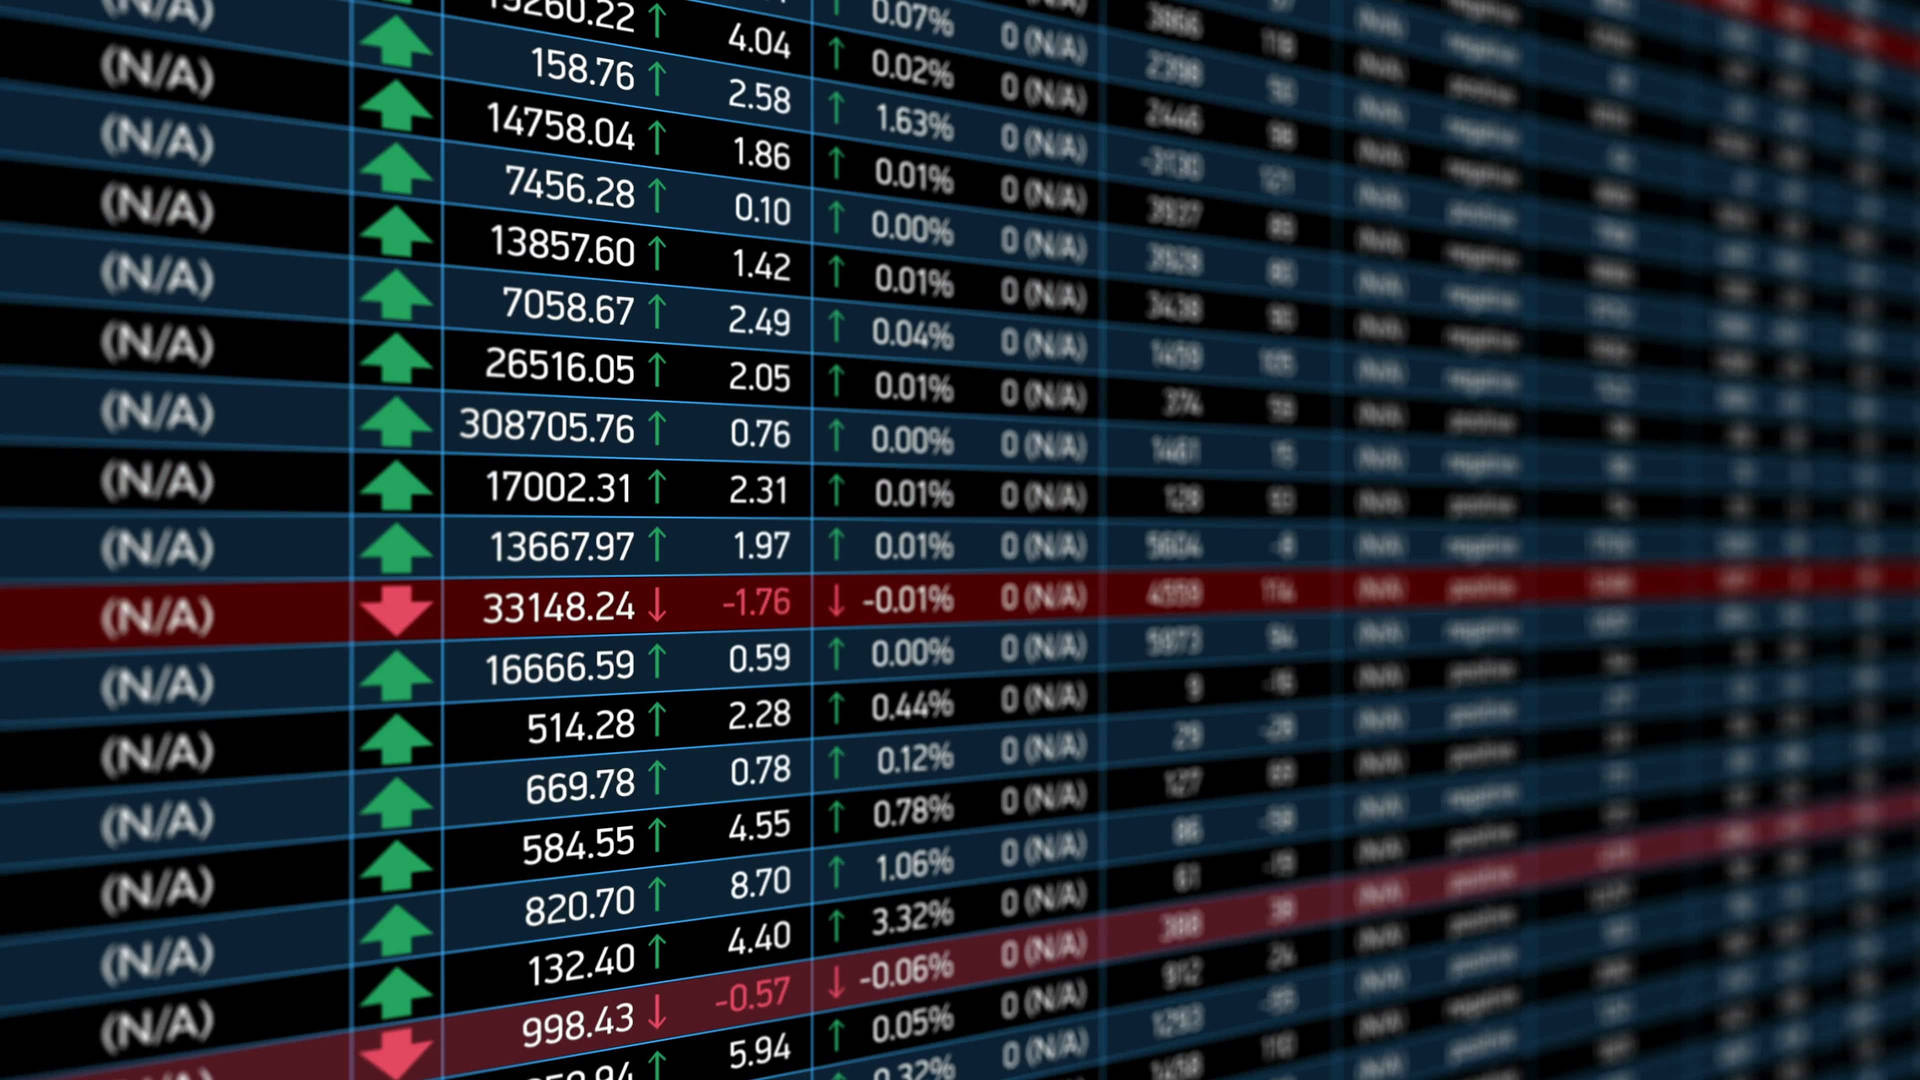 Stock Market Data Trends Wallpaper